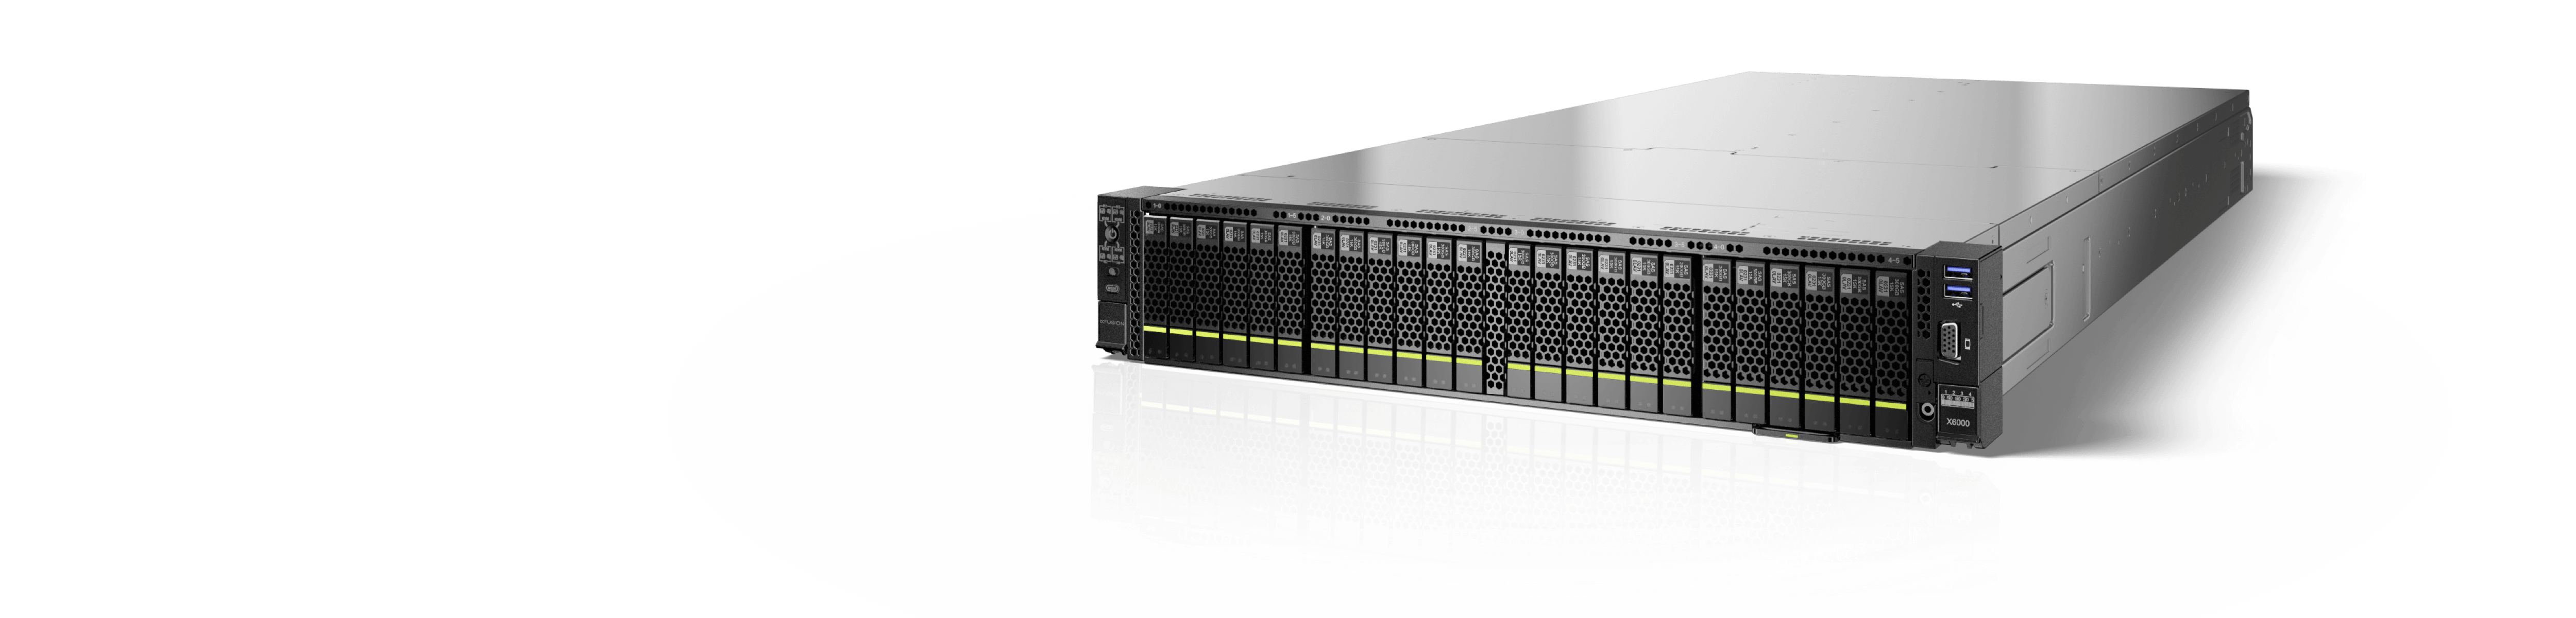 FusionServer series high-density servers